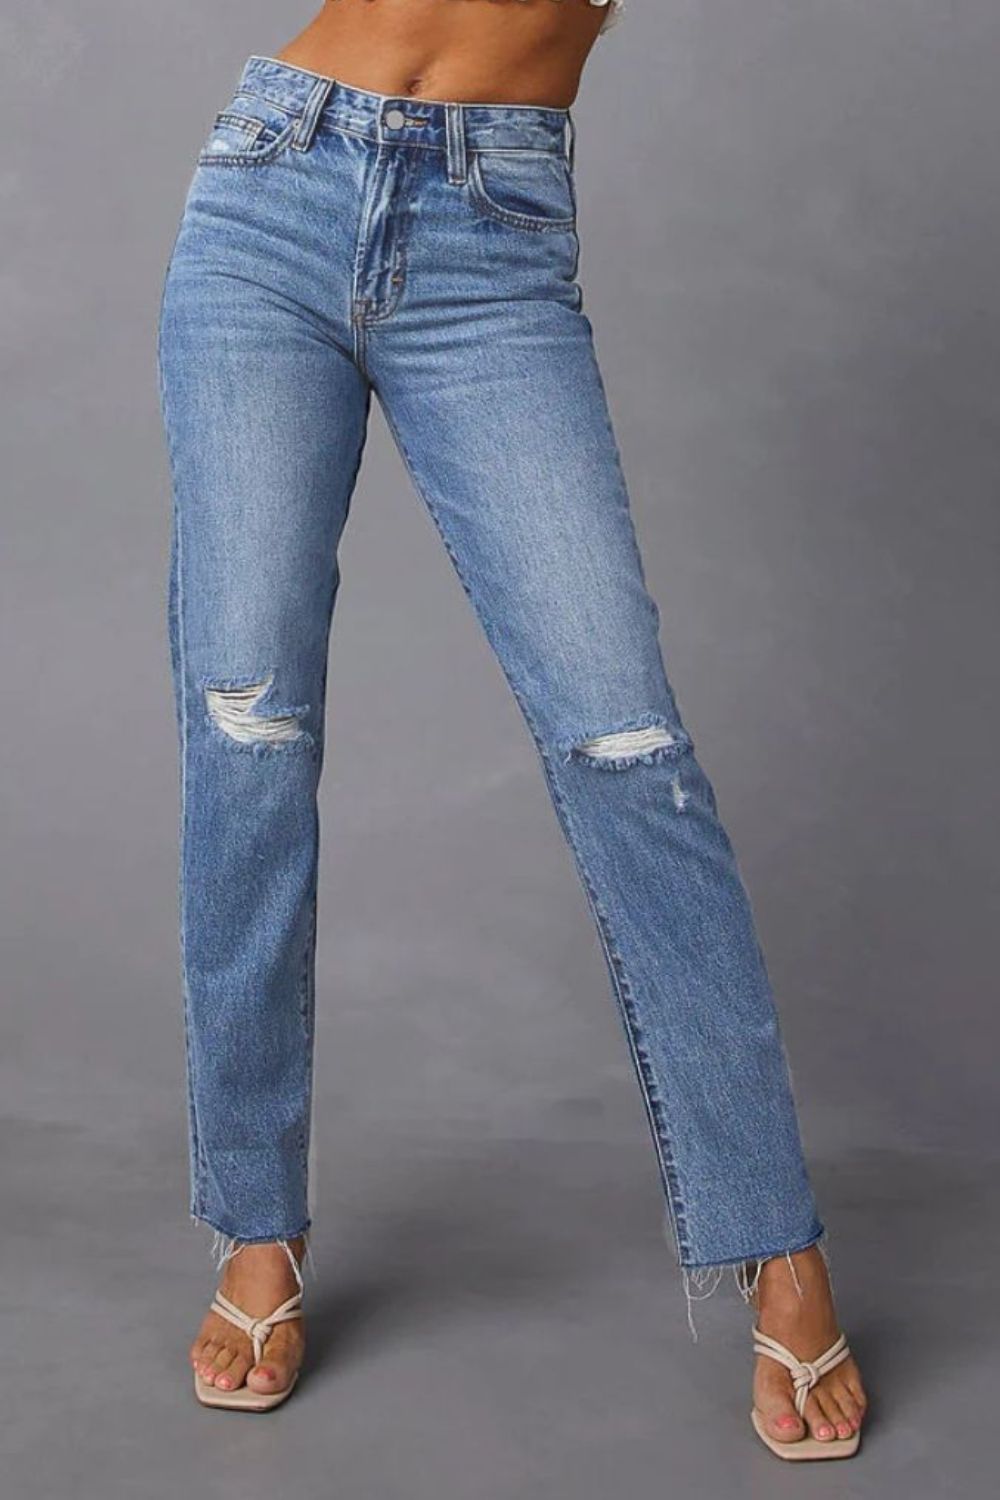 Distressed Raw Hem Straight Jeans with Pockets Bottom wear